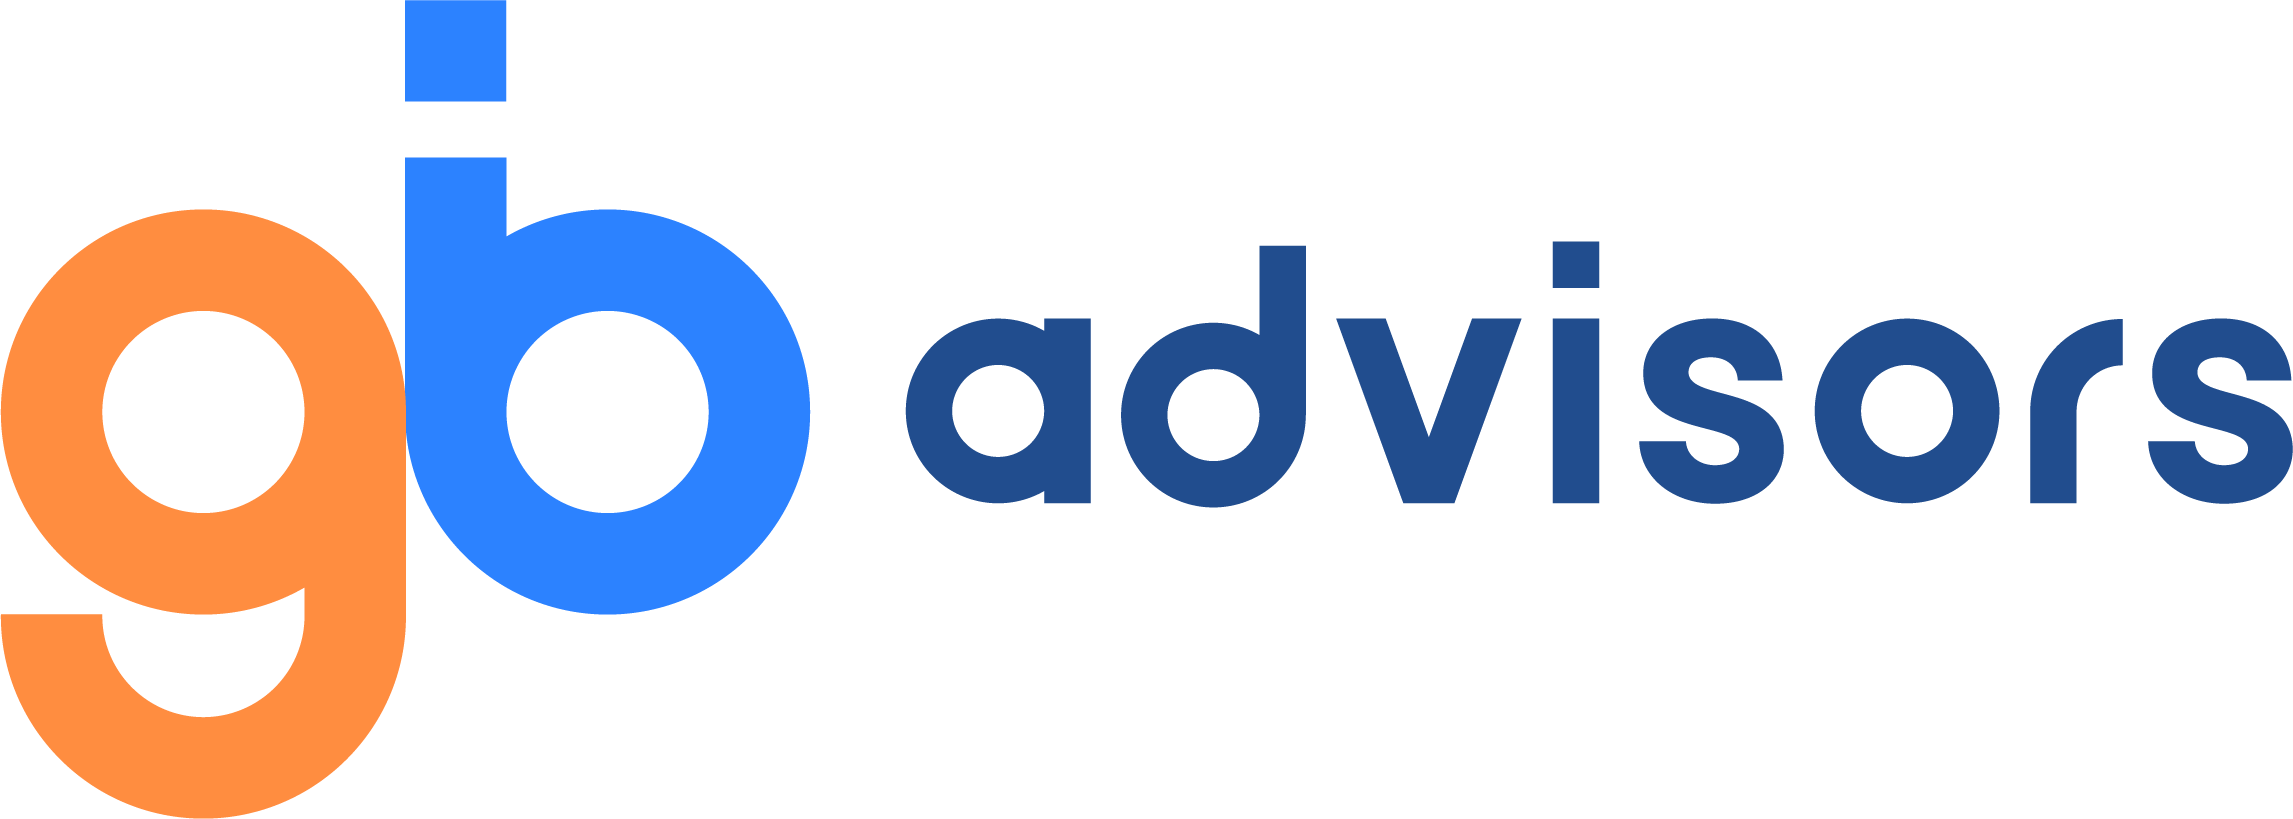 GB Advisors logo